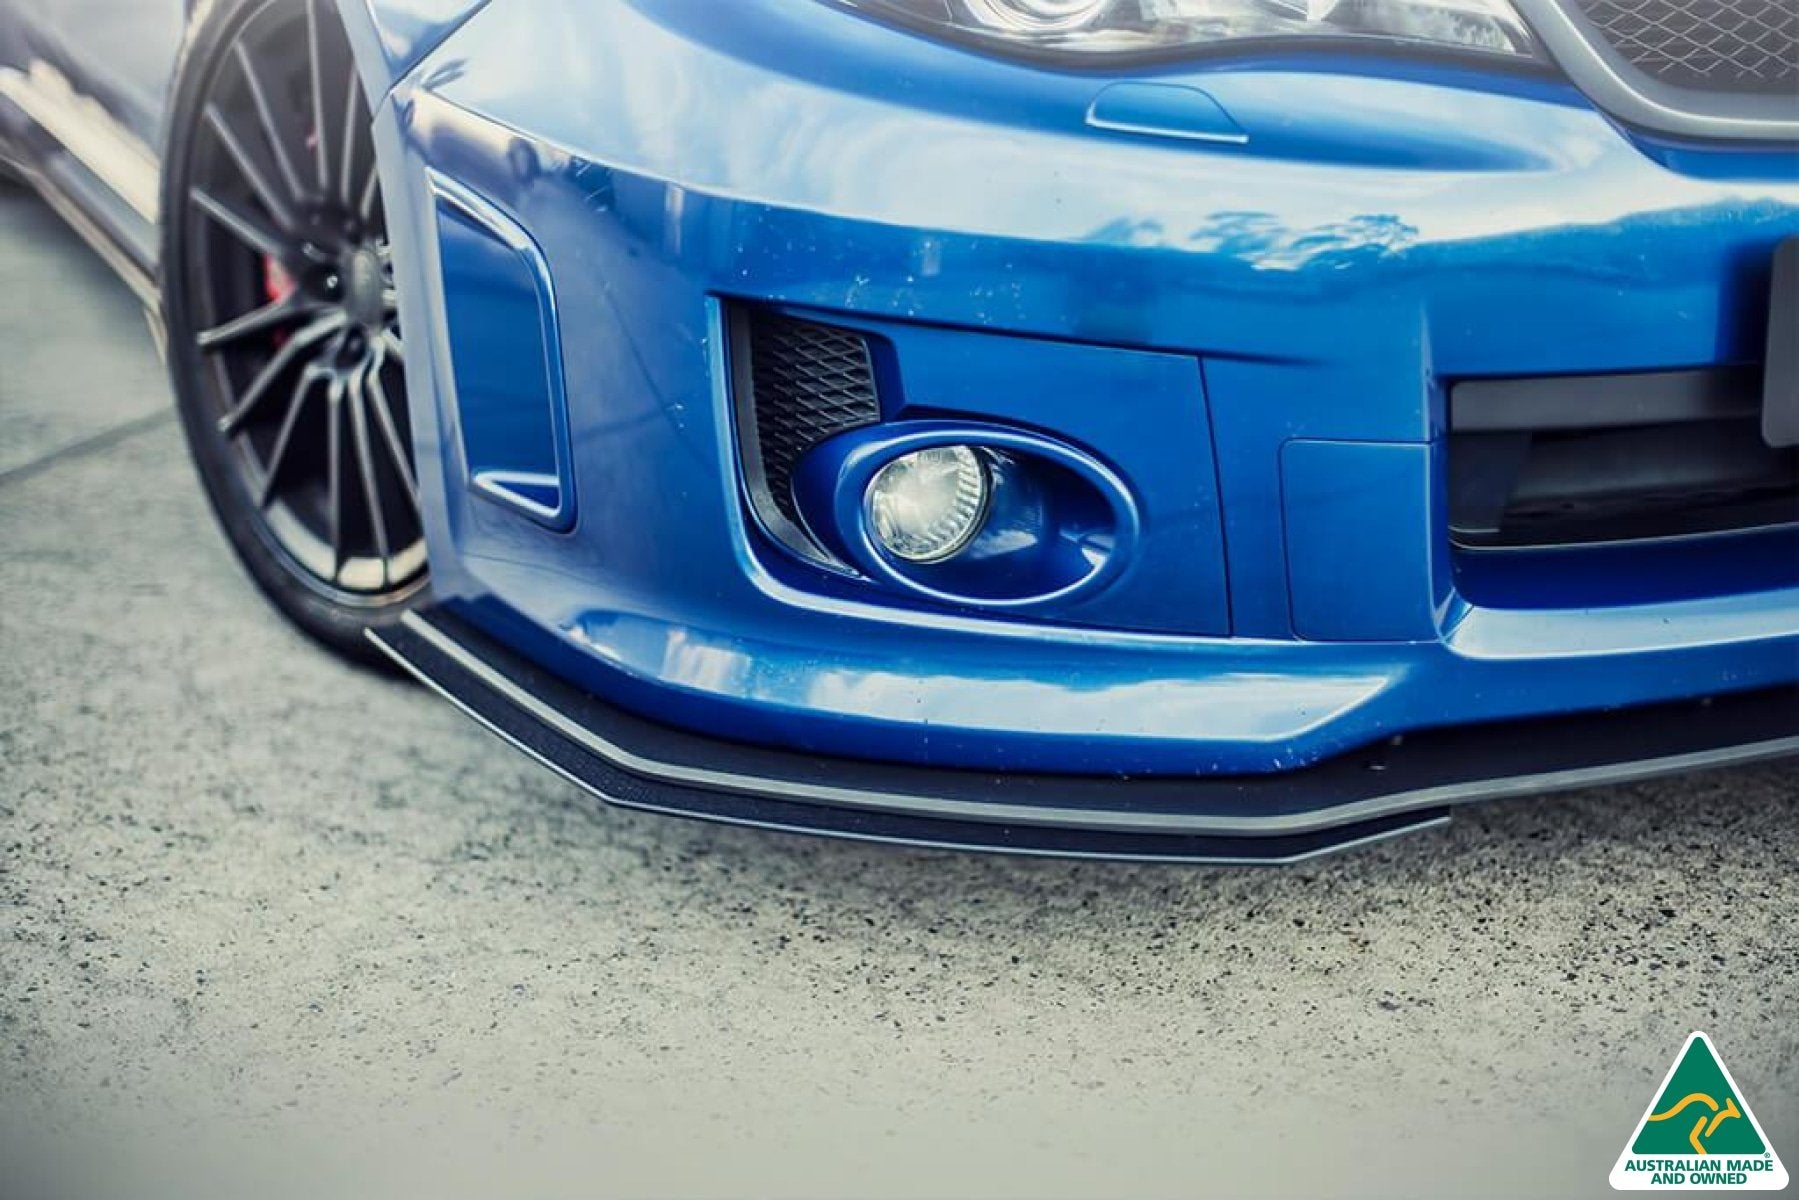 Impreza WRX / STI G3 Hatch (FL) Front Lip Splitter Extensions (Pair) - MODE Auto Concepts